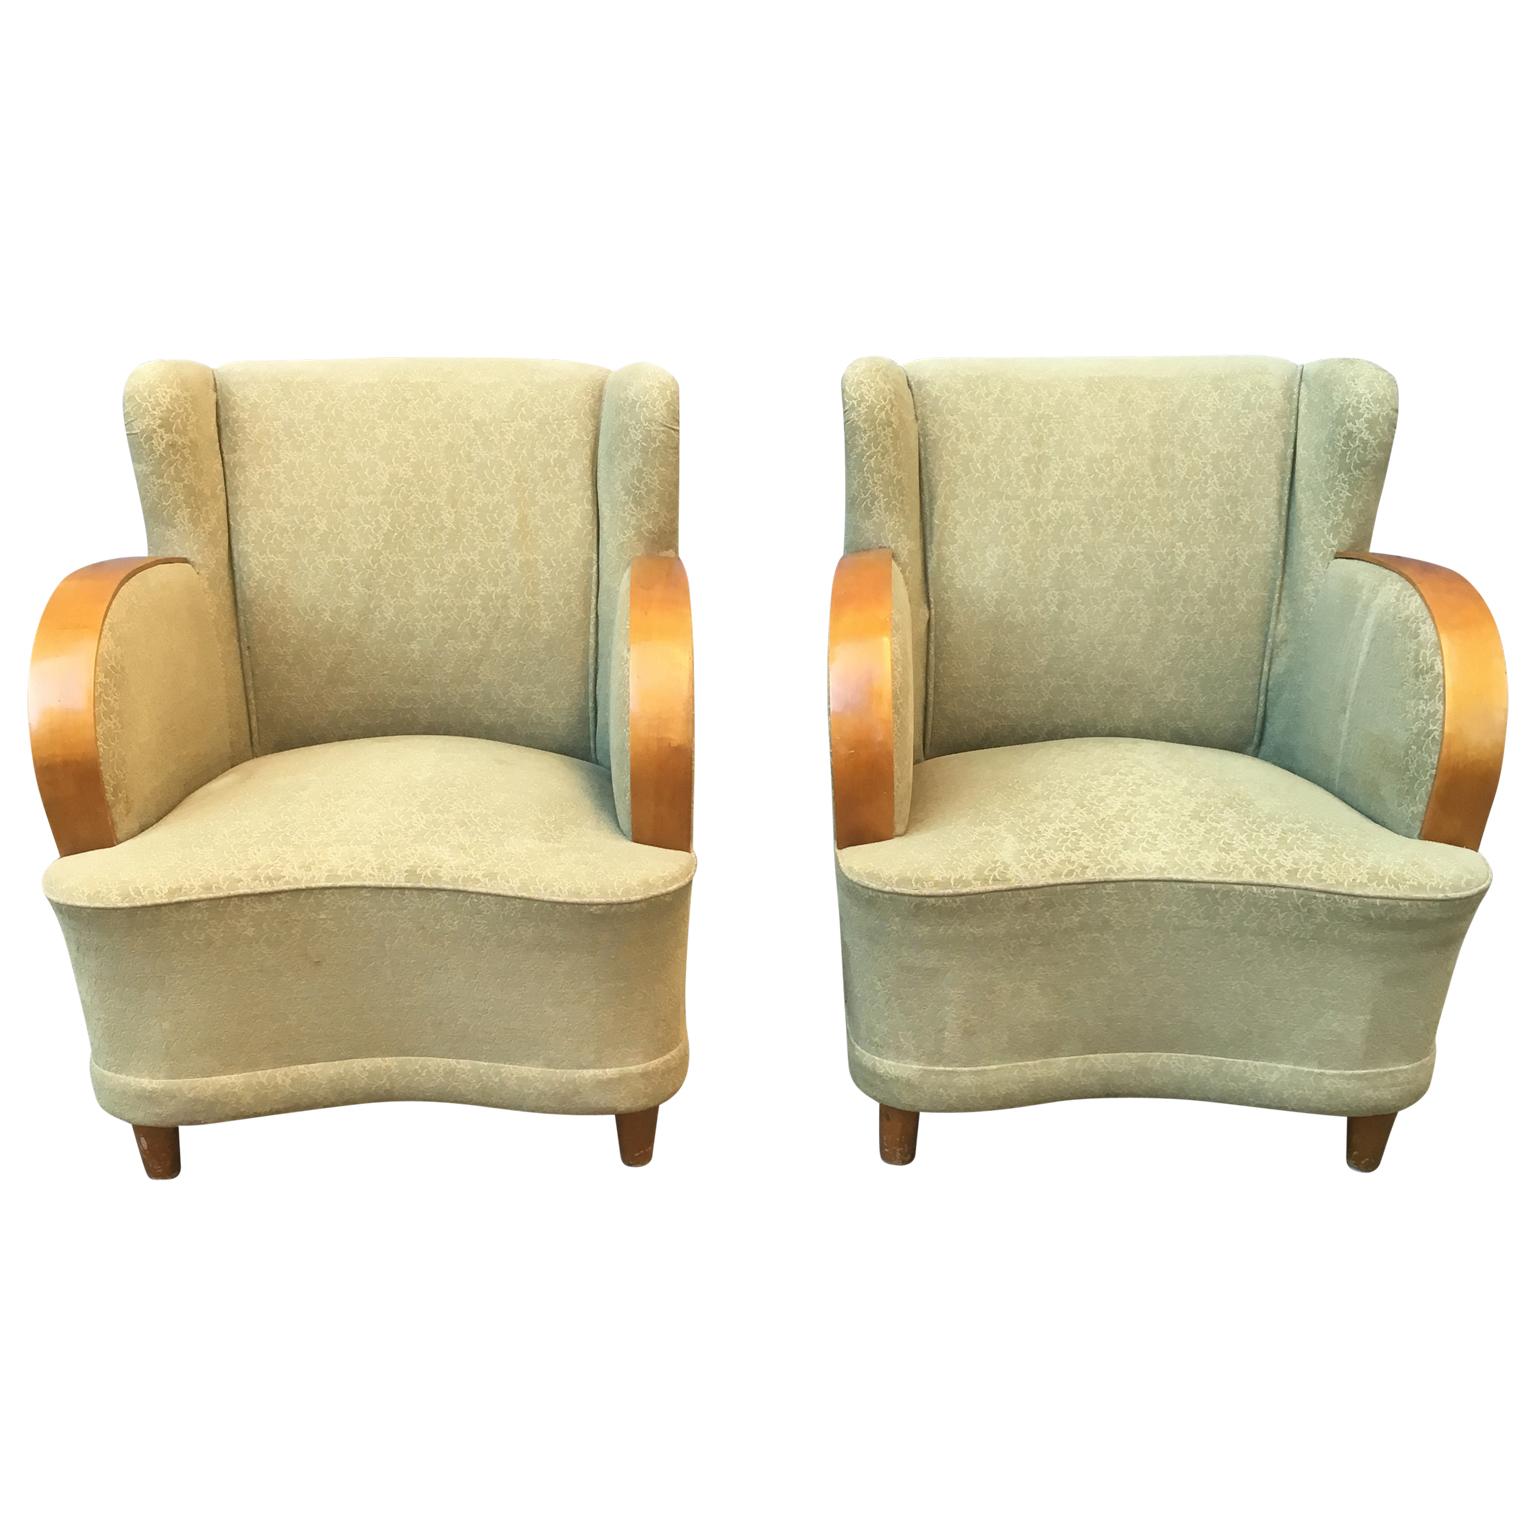 Pair of Swedish Art Deco lounge chairs.